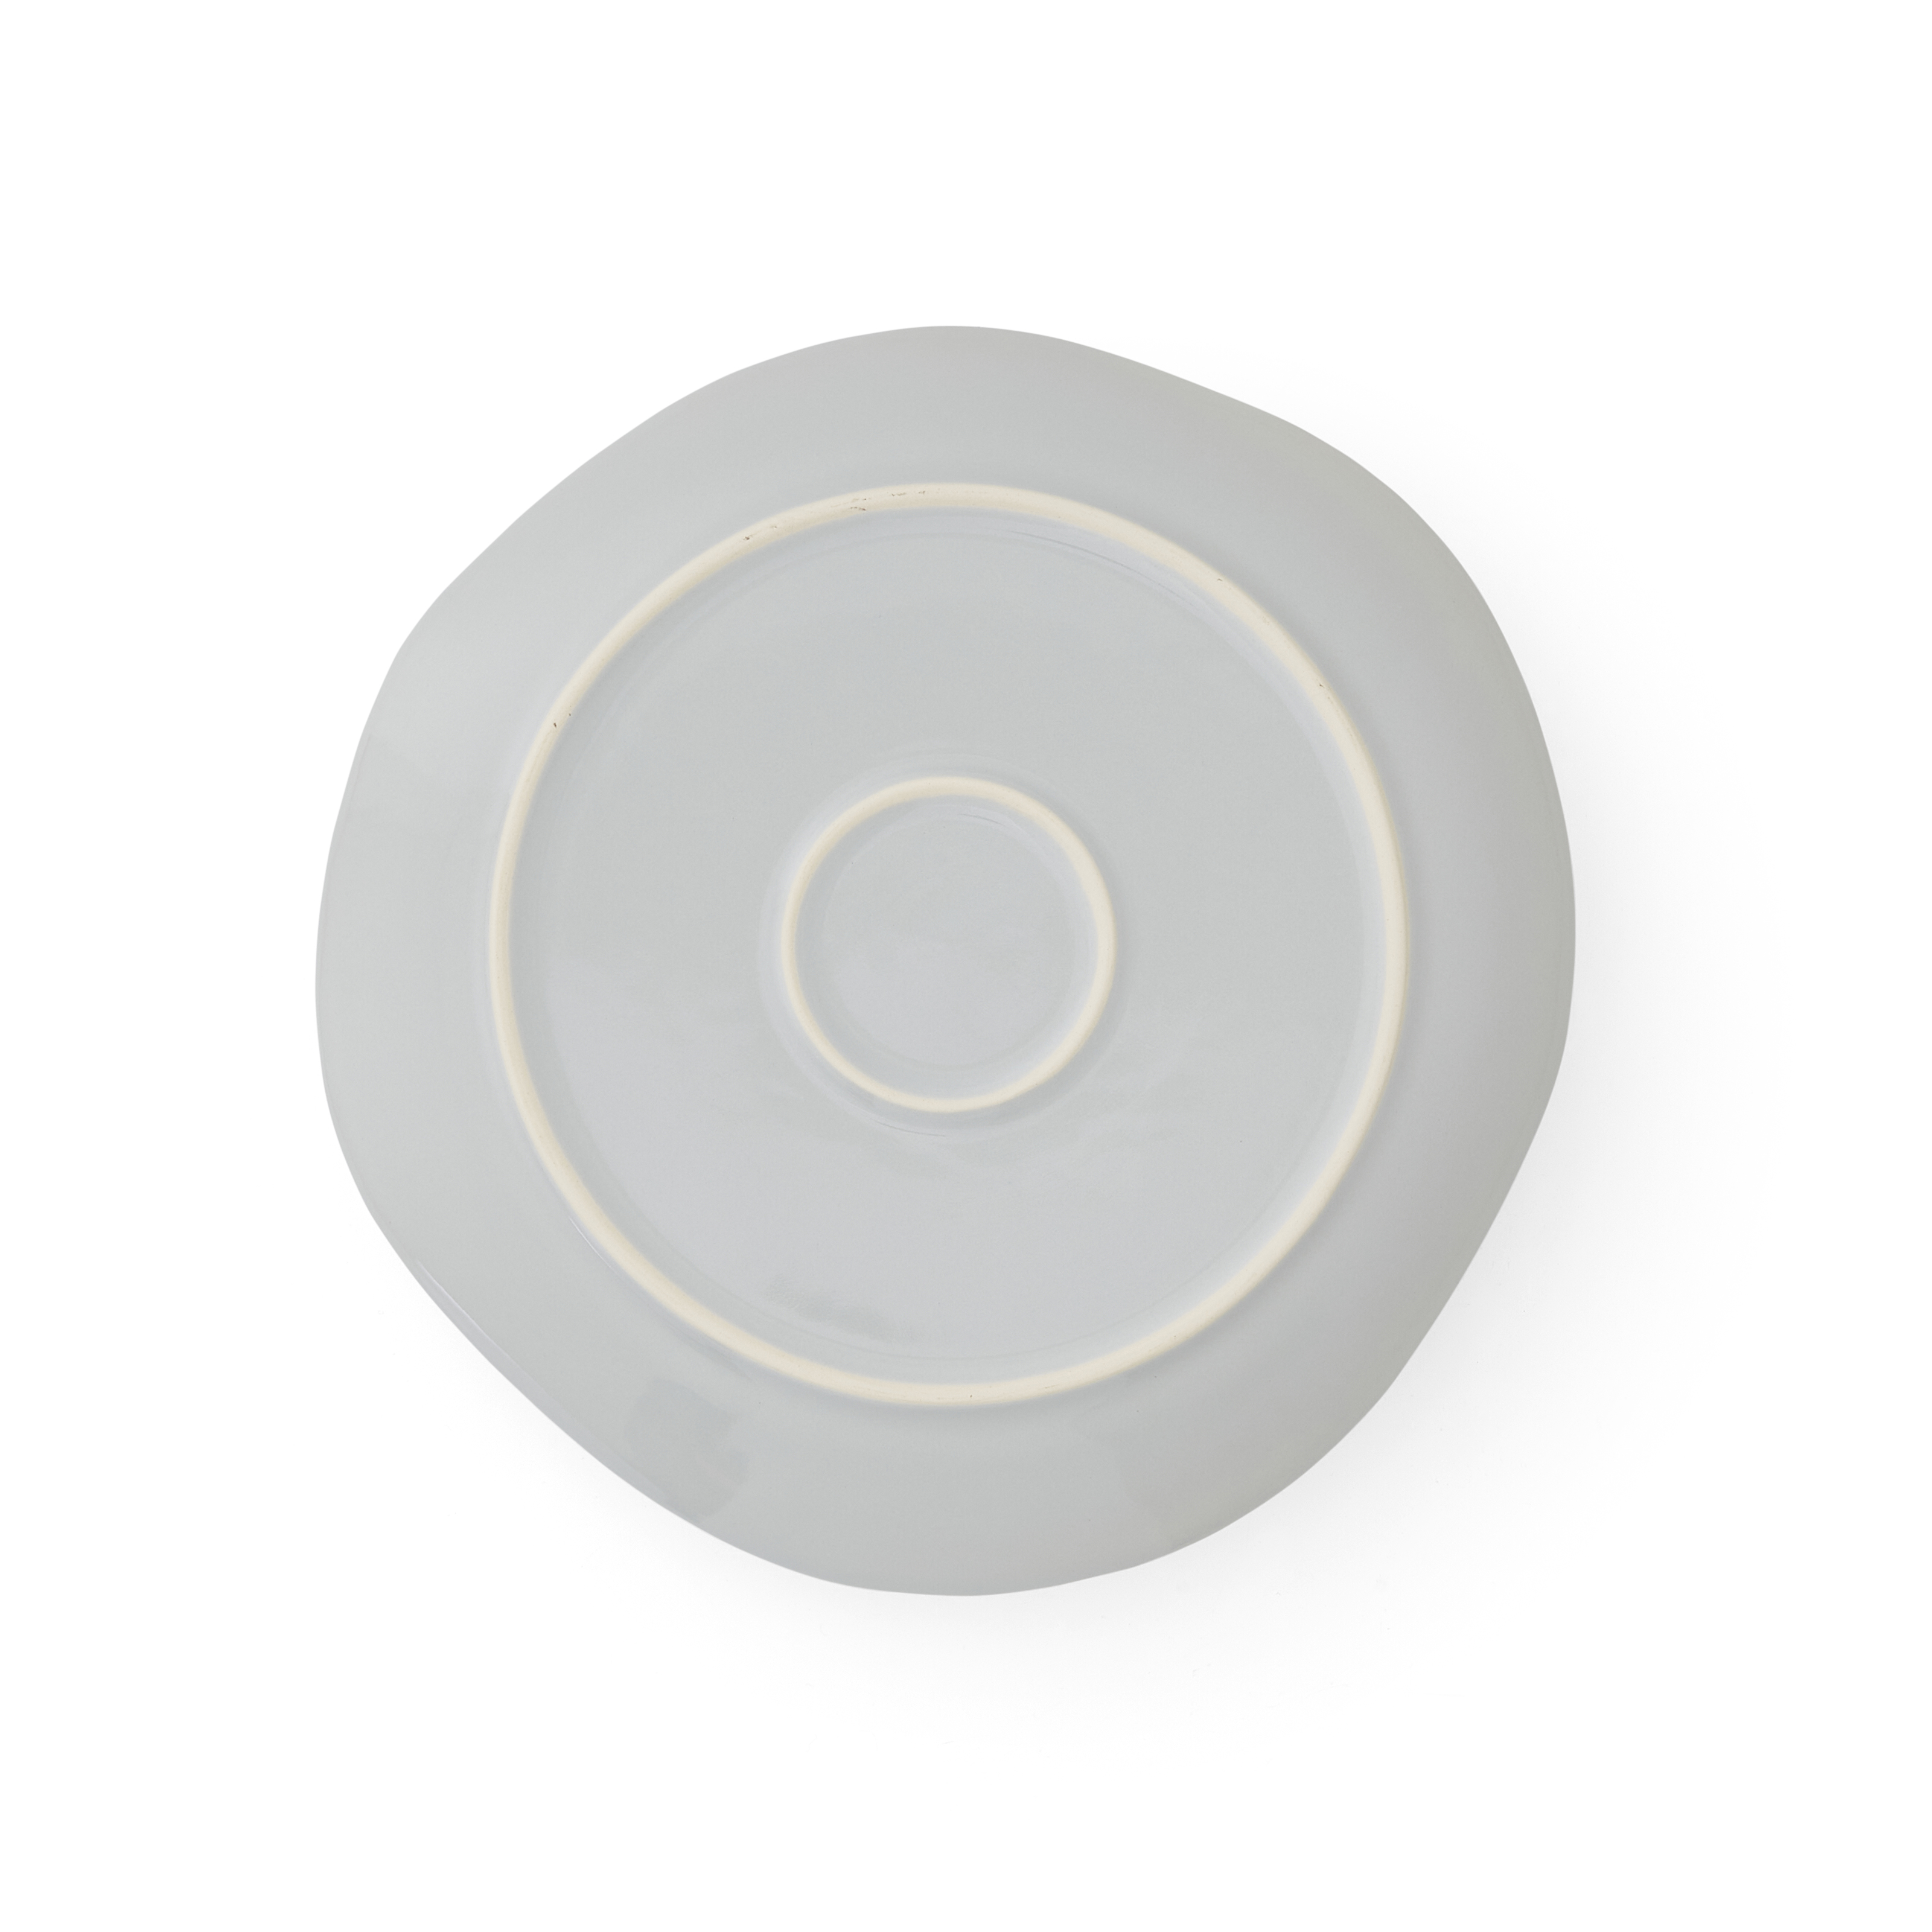 Sophie Conran Arbor Dinner Plate, Grey image number null